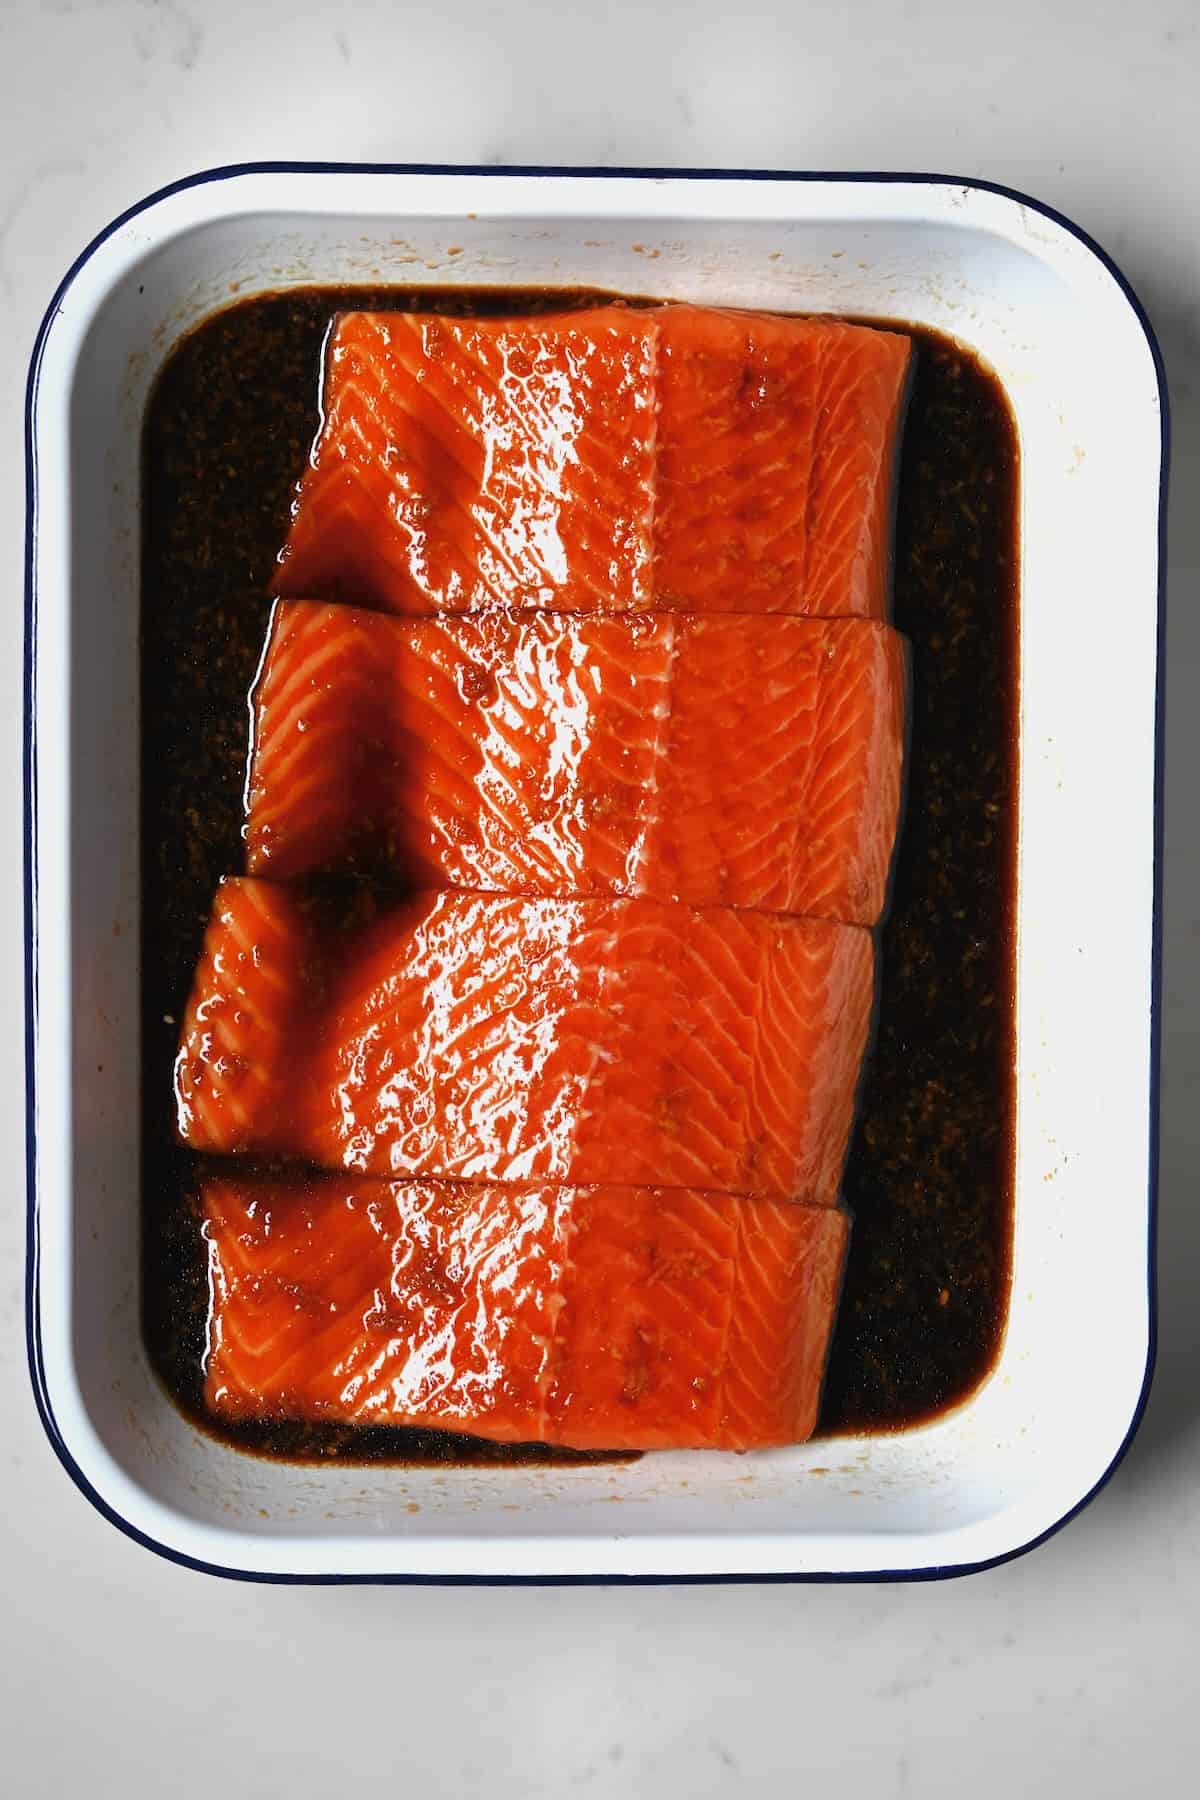 Salmon marinating in teriyaki sauce